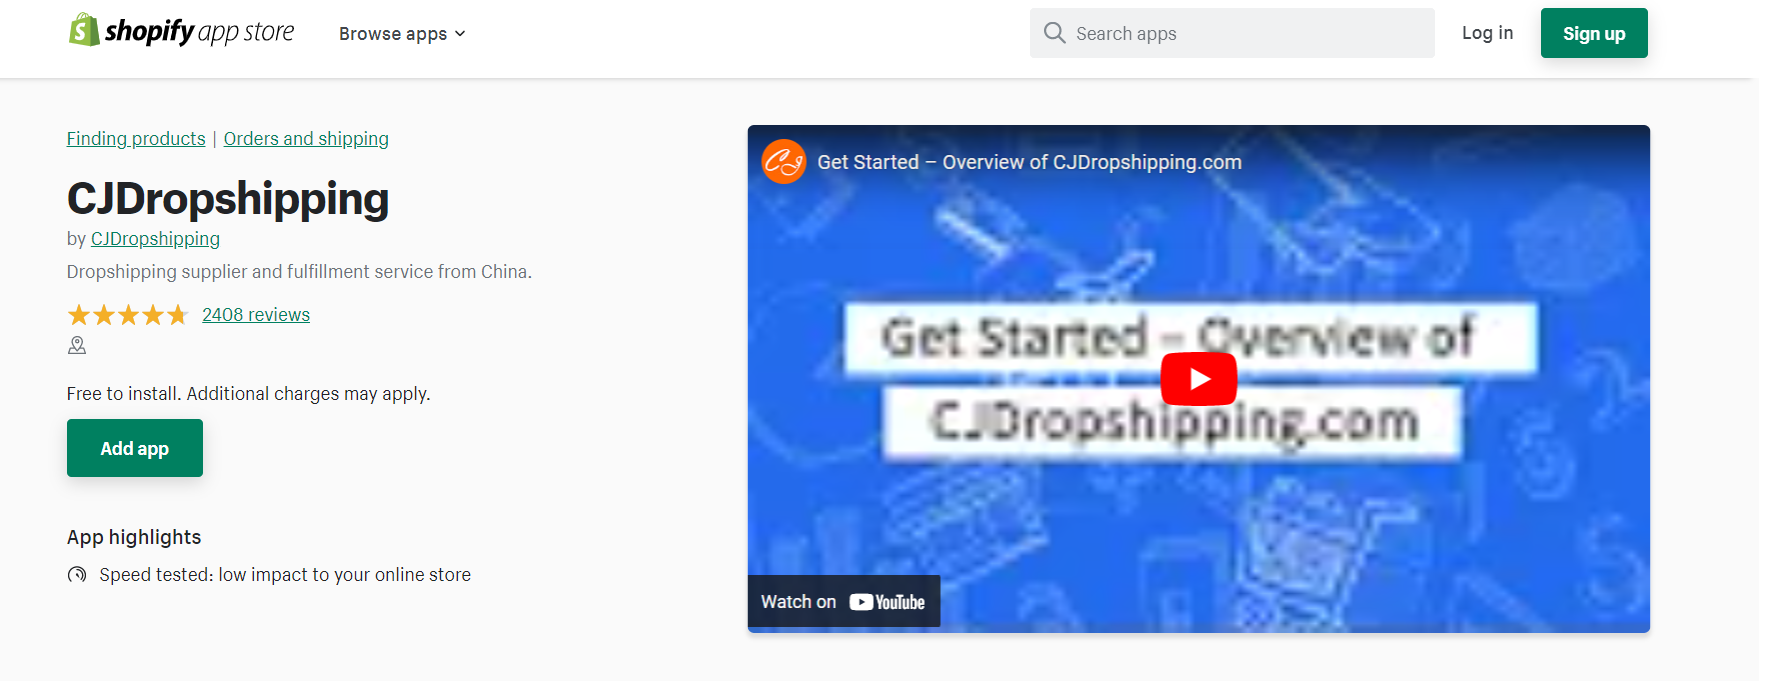 cj dropshipping app